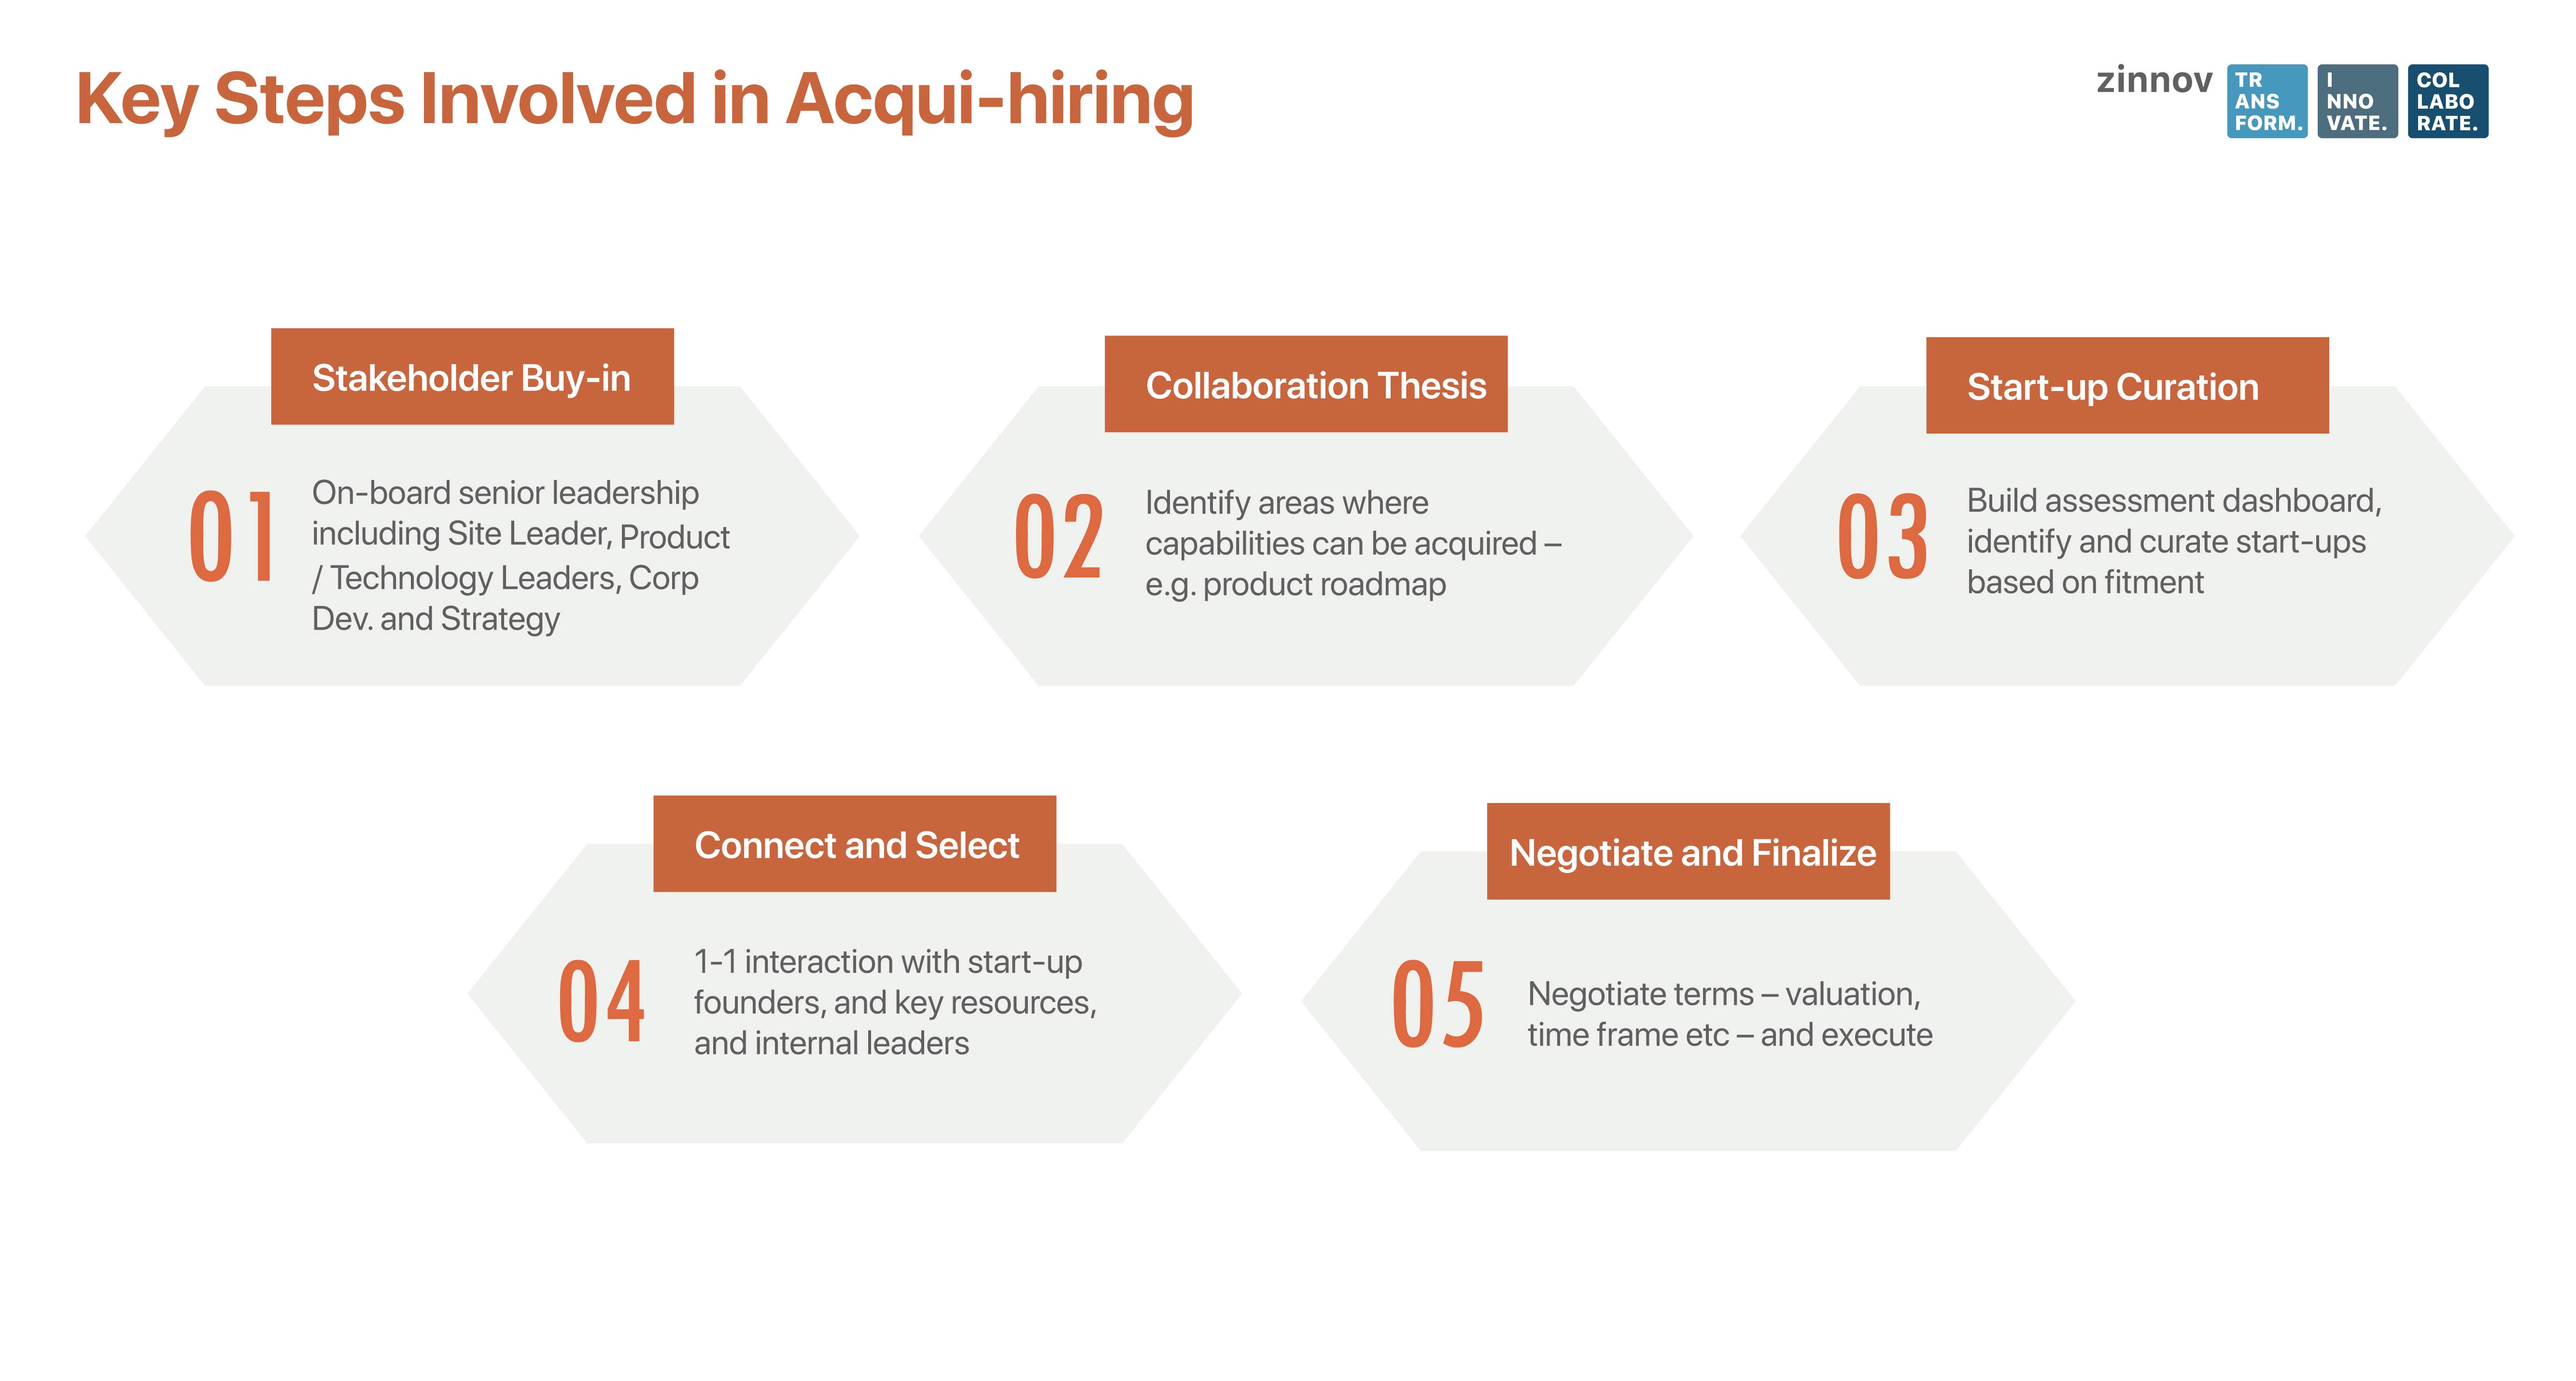 Key Steps in Acqui-hiring